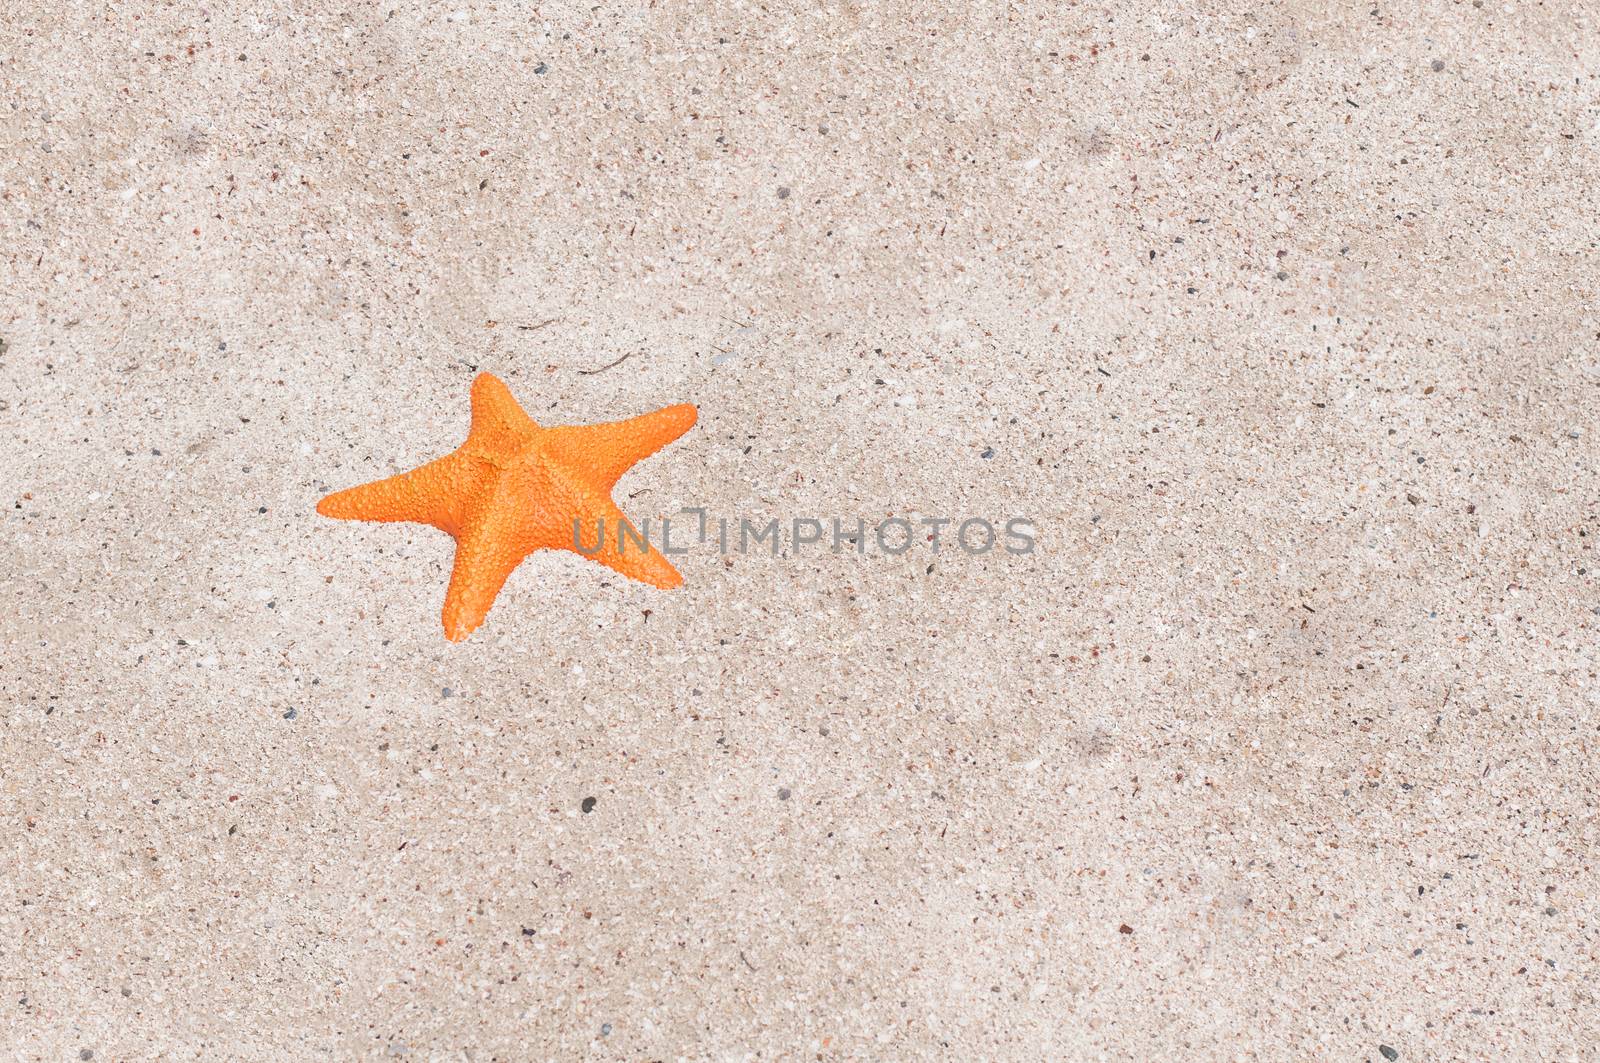 A sea star sea star by Sorapop